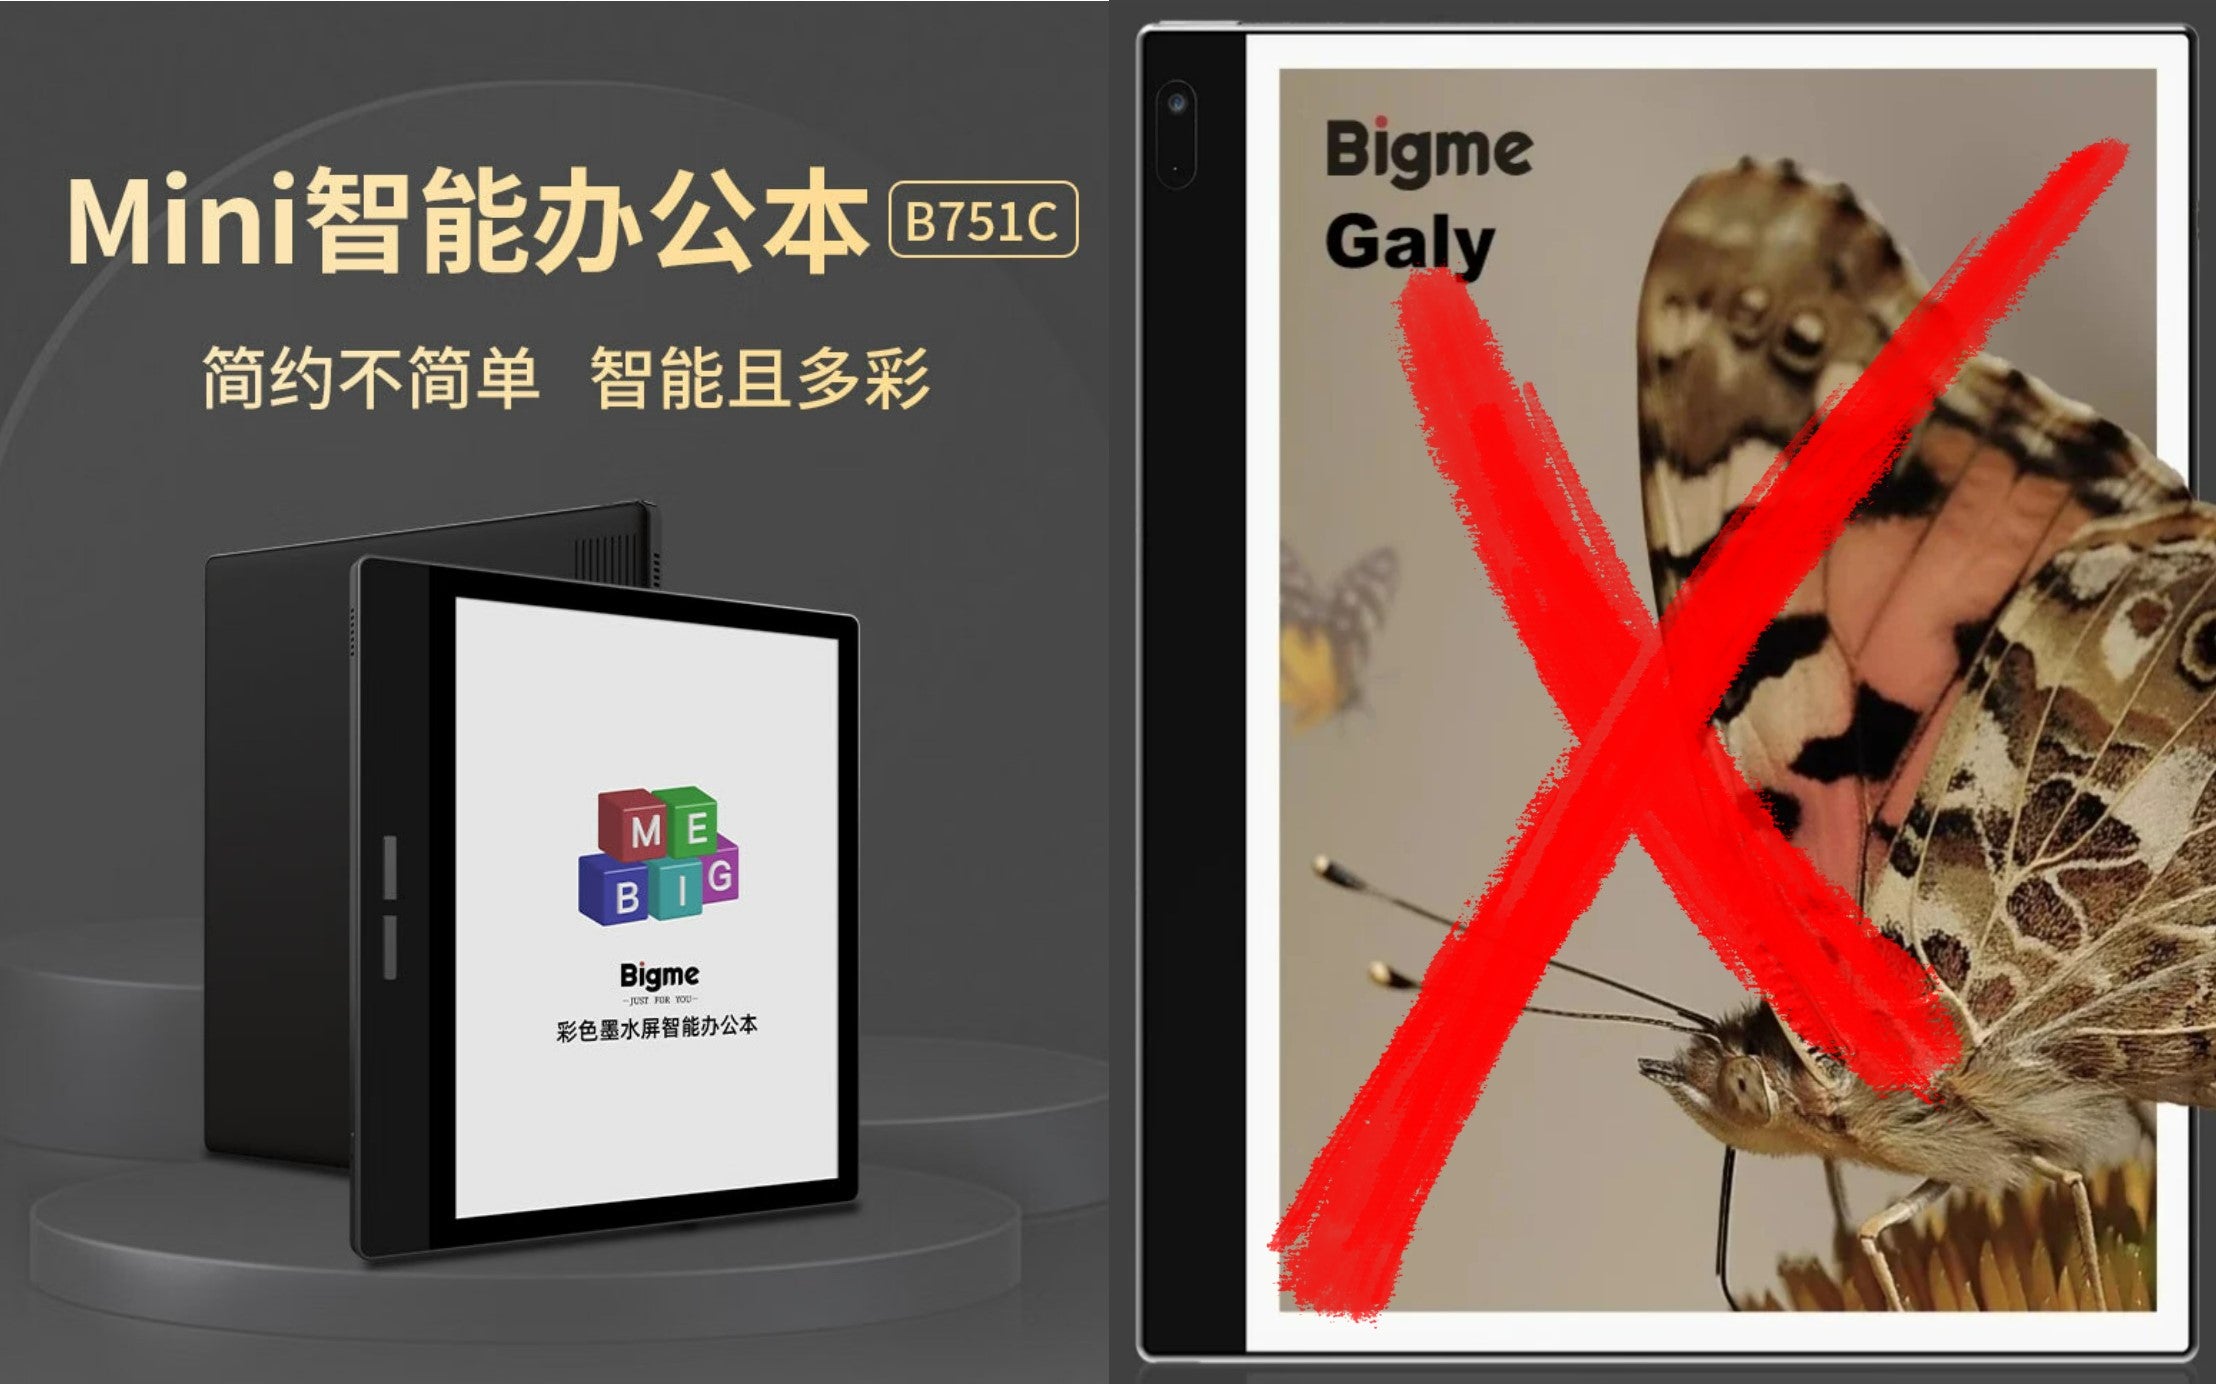 Bigme大我的市場策略，推出彩色B751C單機版，停產採用Gallery 3技術的Galy